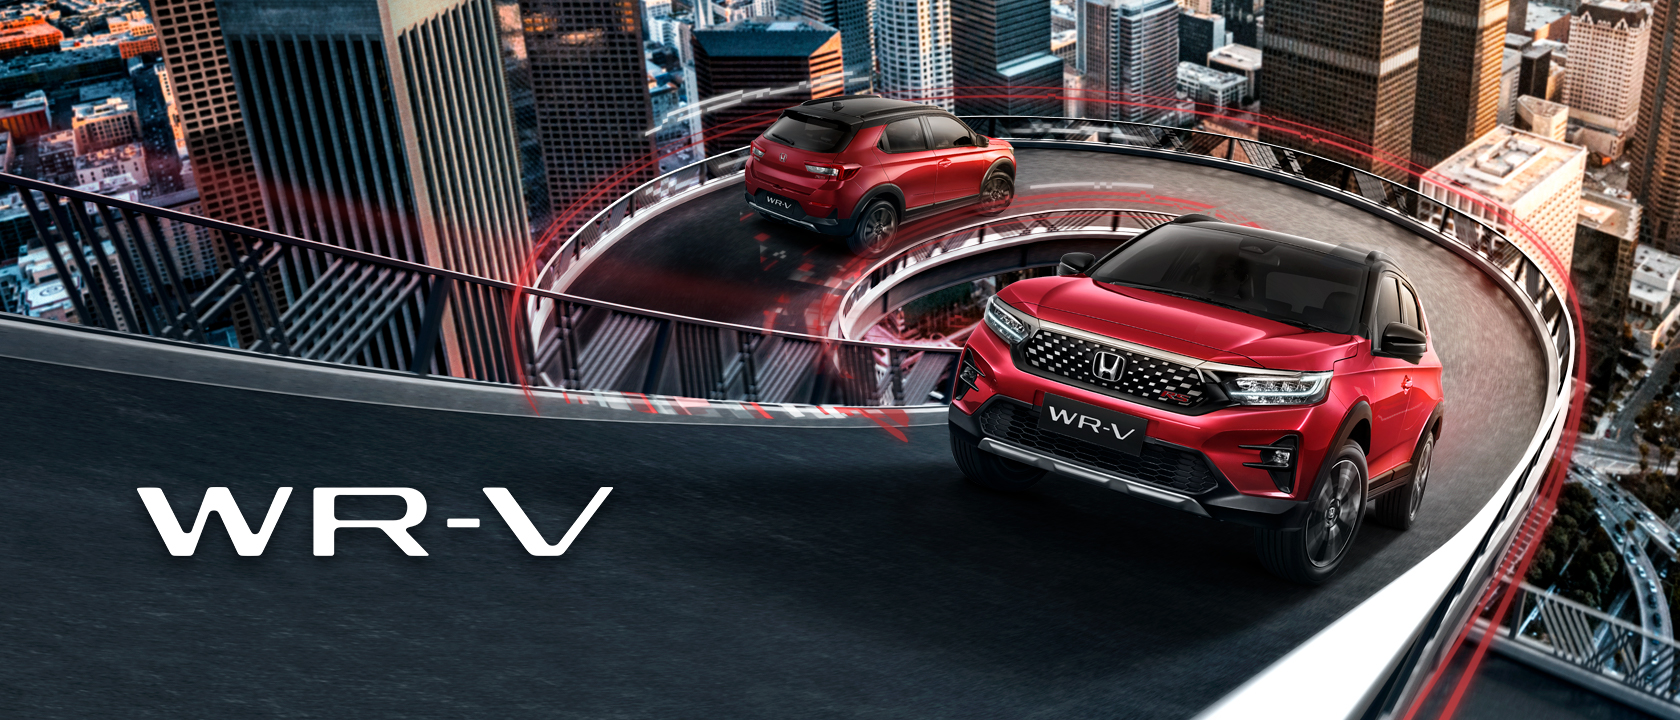 Honda Luncurkan All New Honda CR-V, SUV Premium Dengan Teknologi